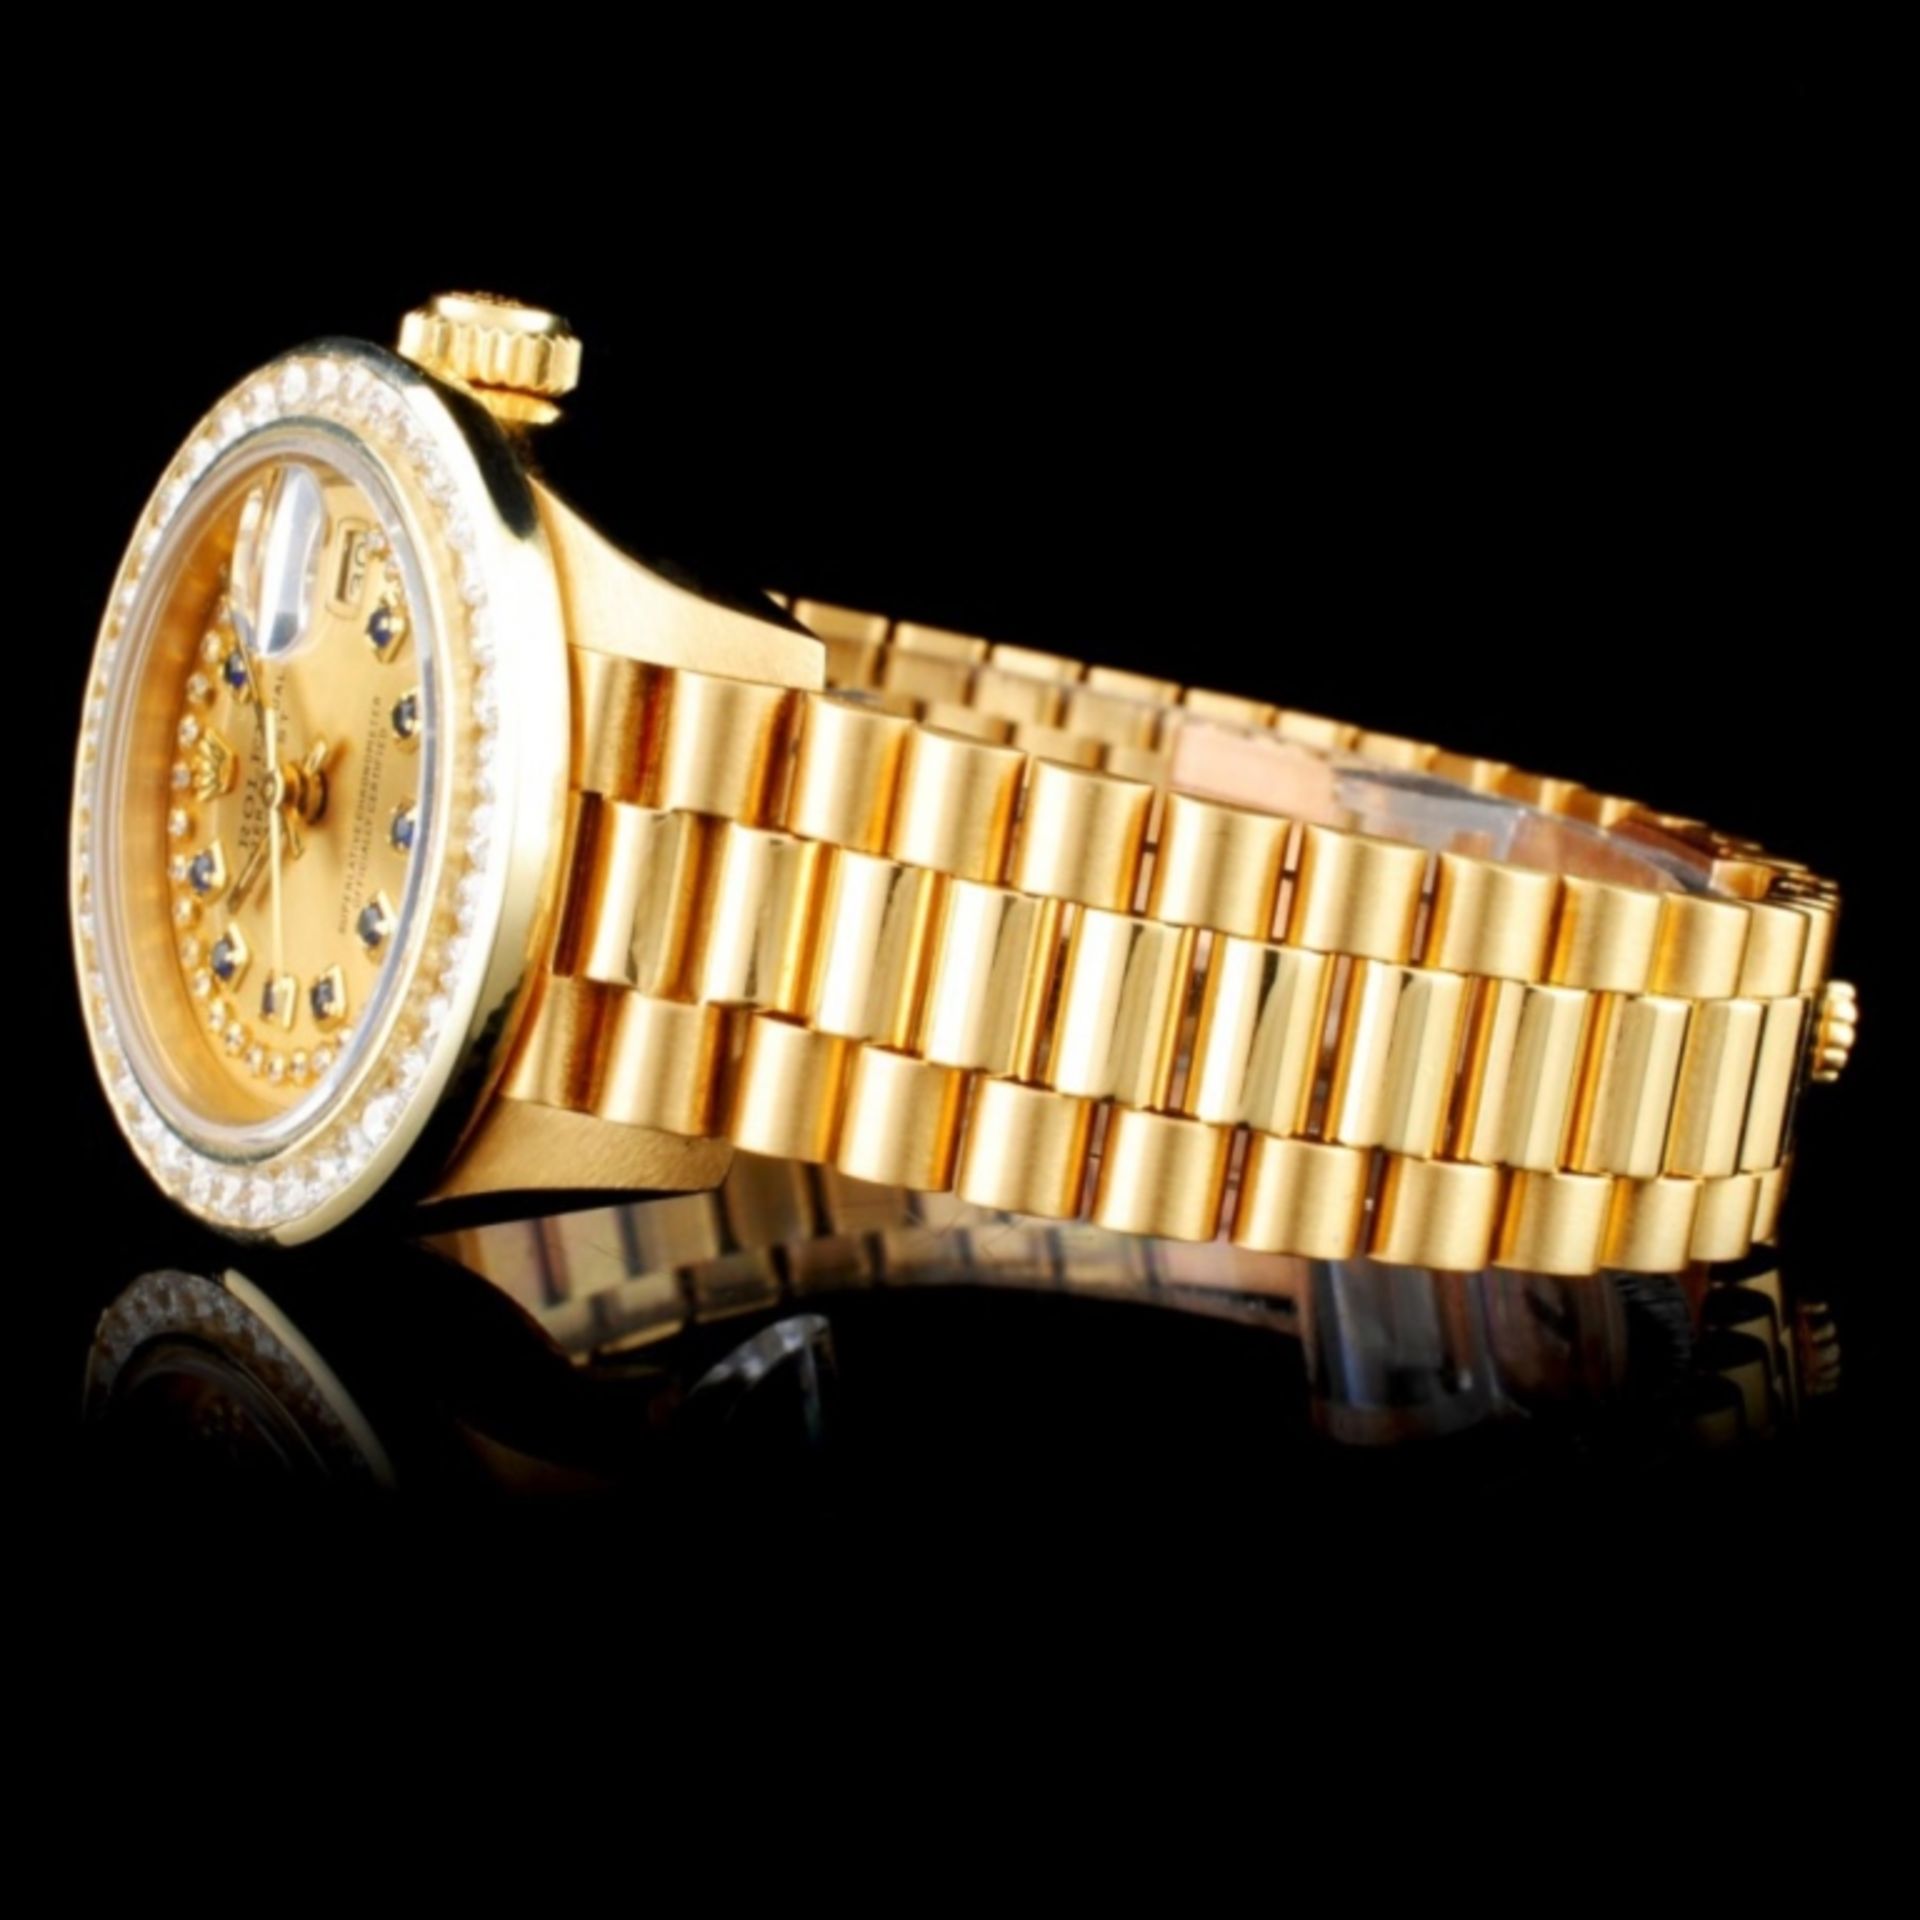 Rolex Presidential Diamond Ladies Watch - Image 3 of 6